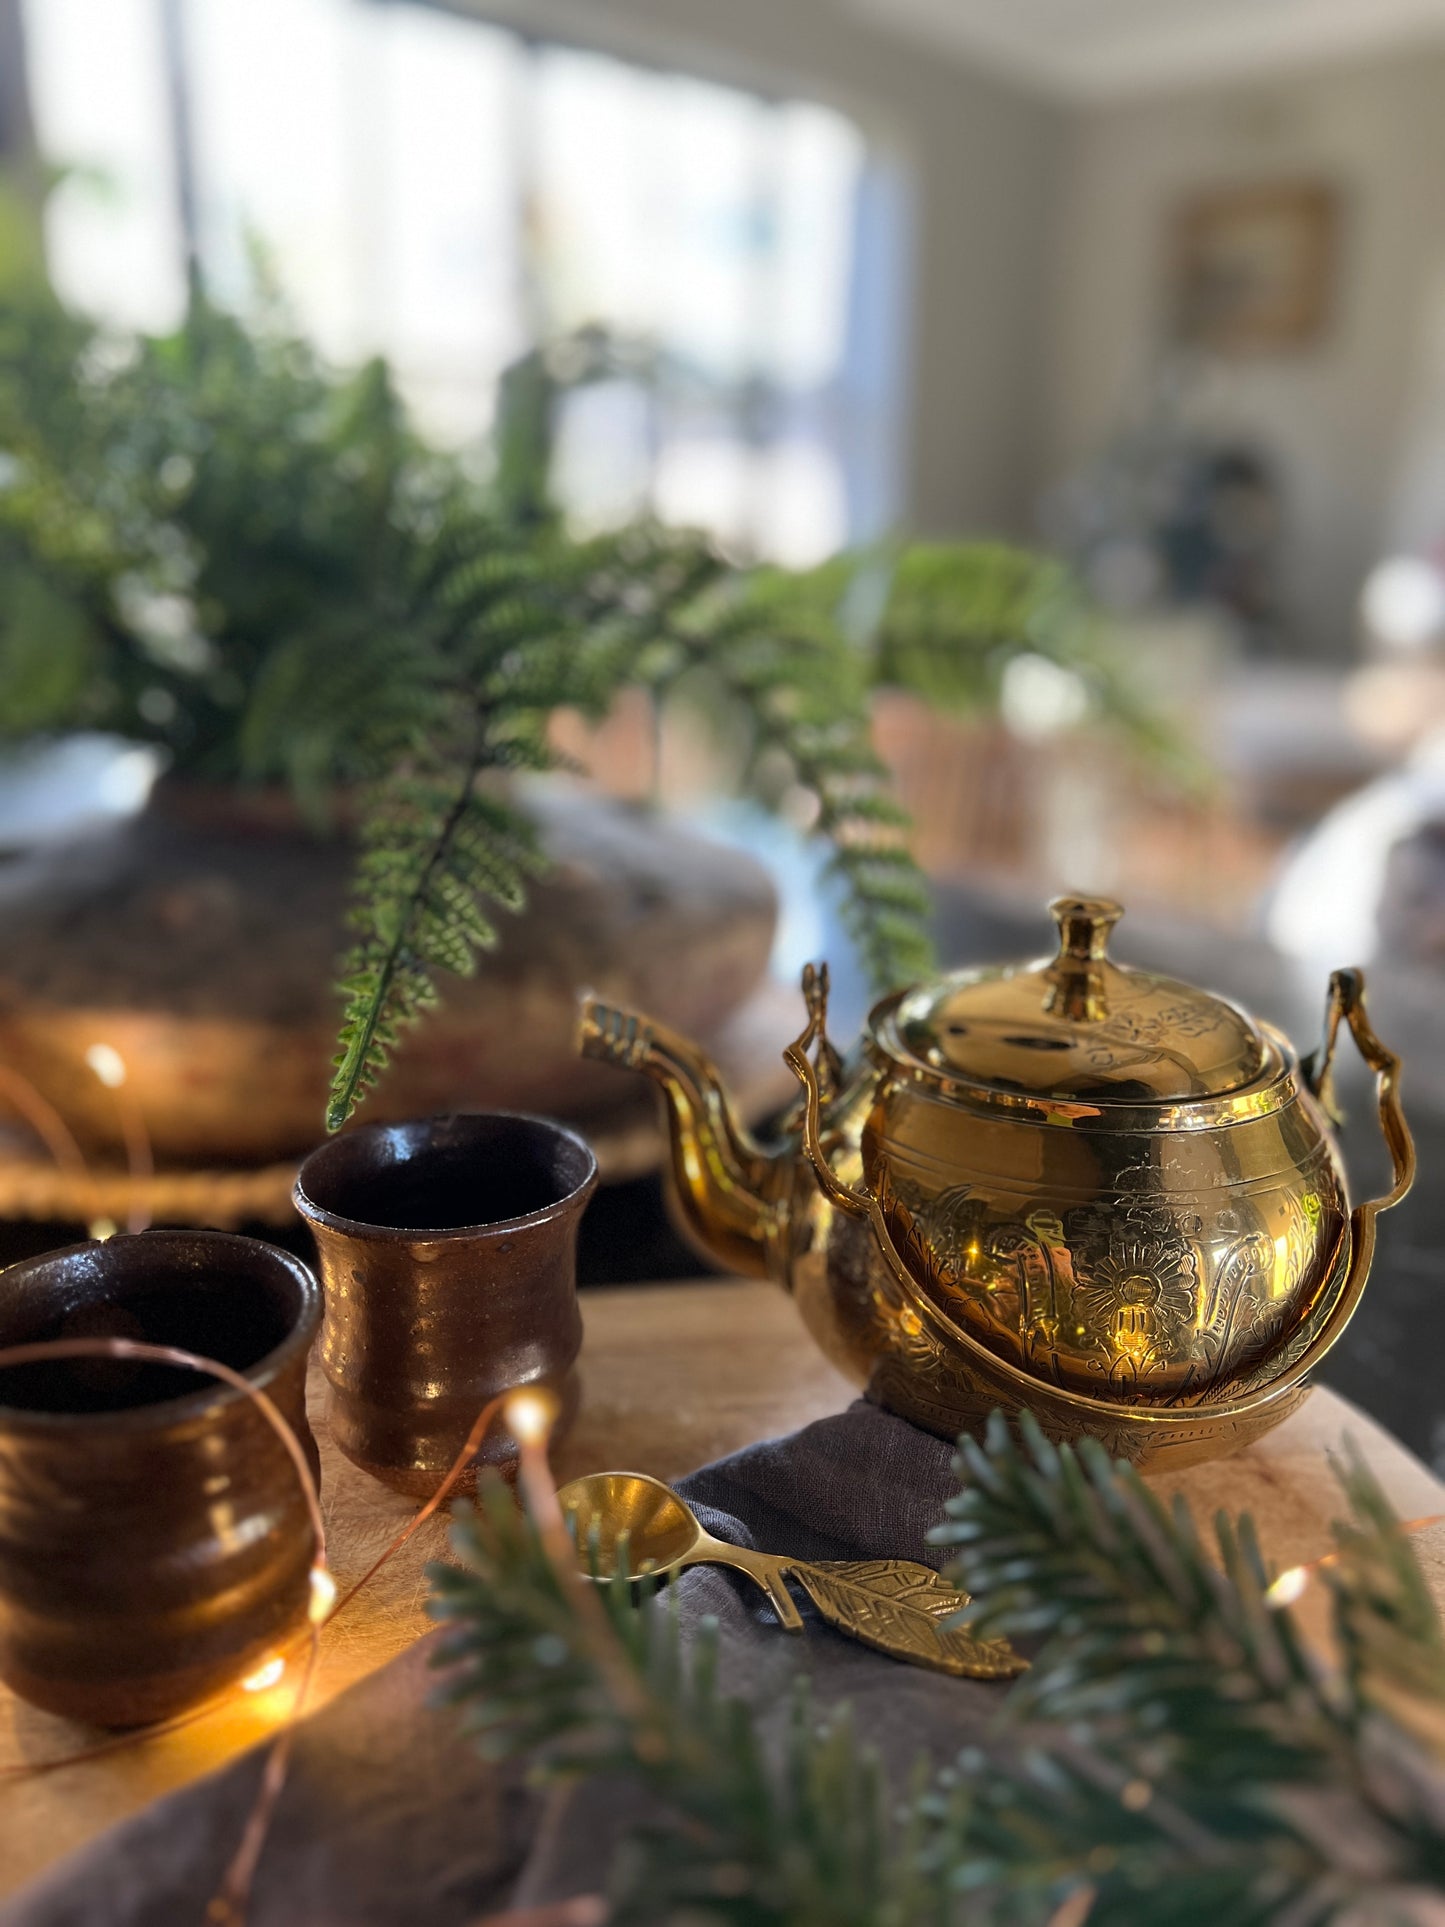 Vintage Etched Brass Teapot